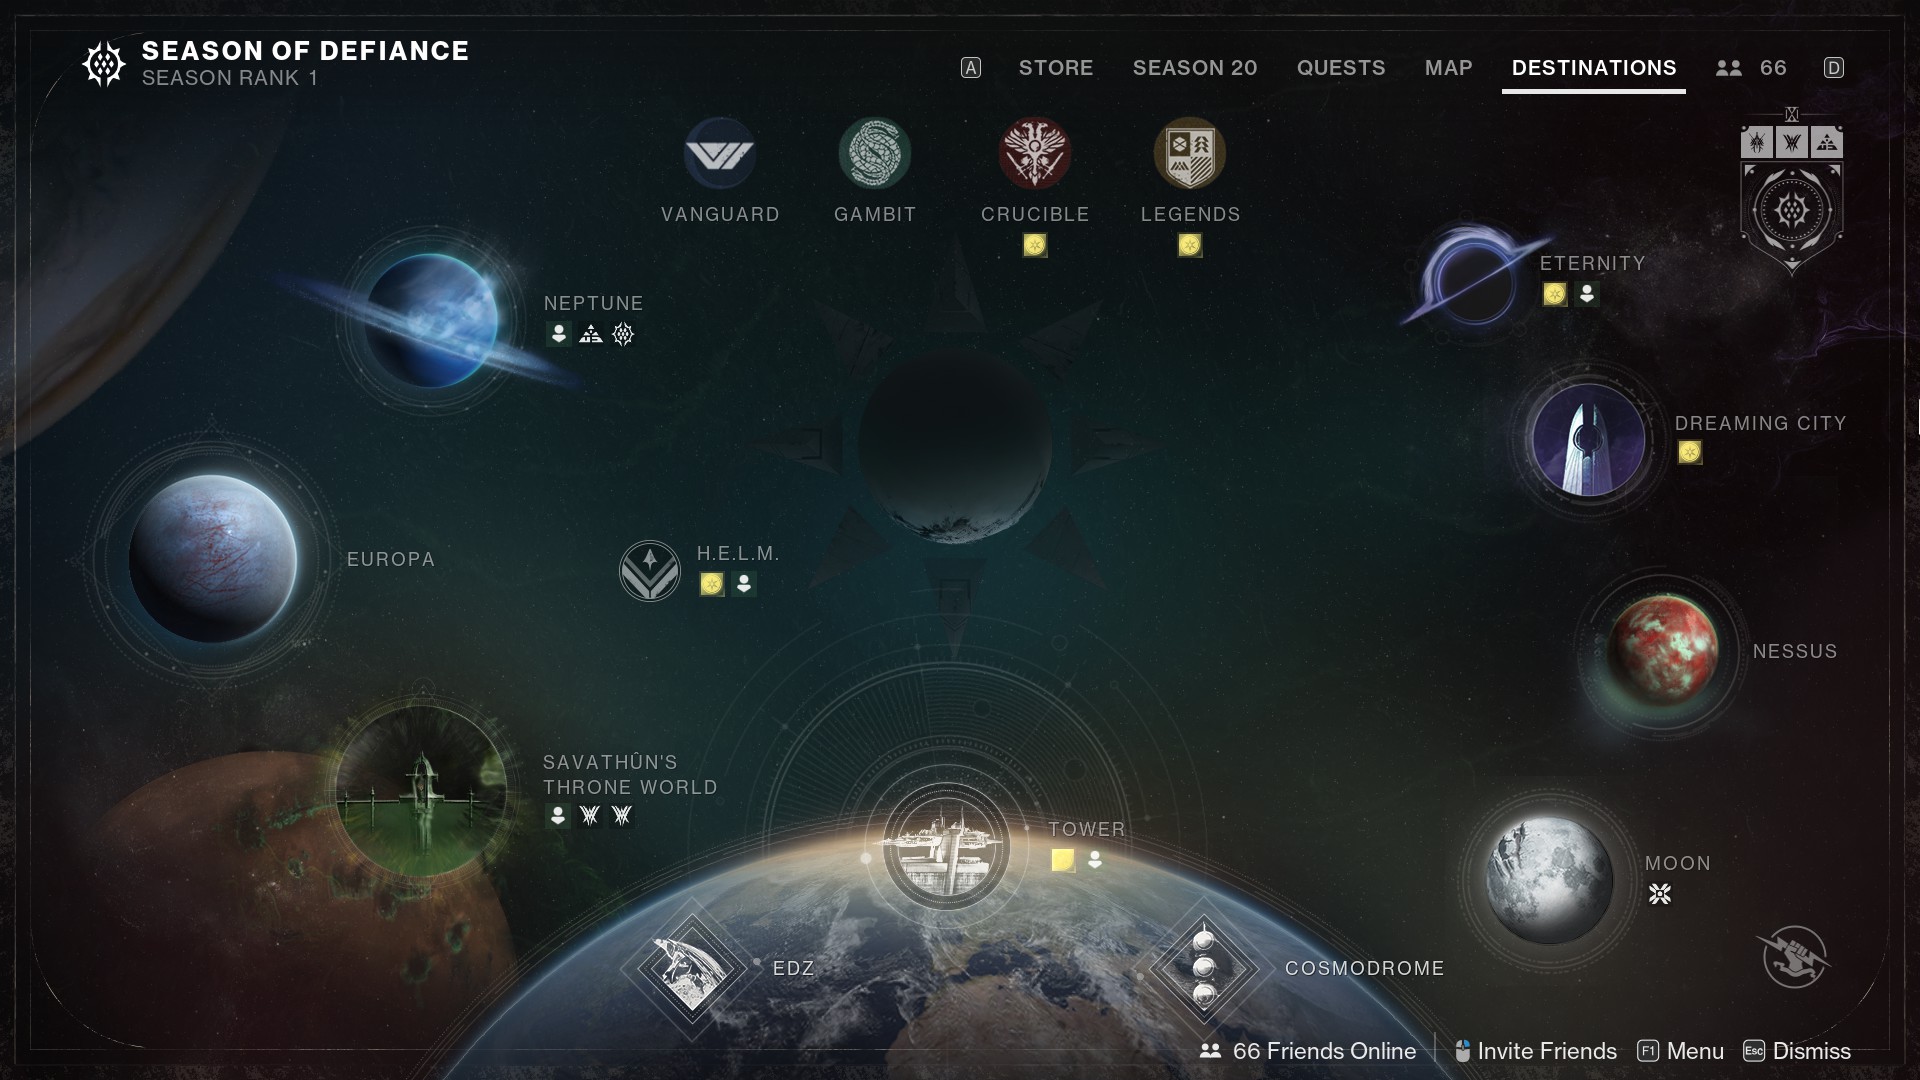 Destiny 2 Beyond Light: All Cosmodrome Golden Chest Locations